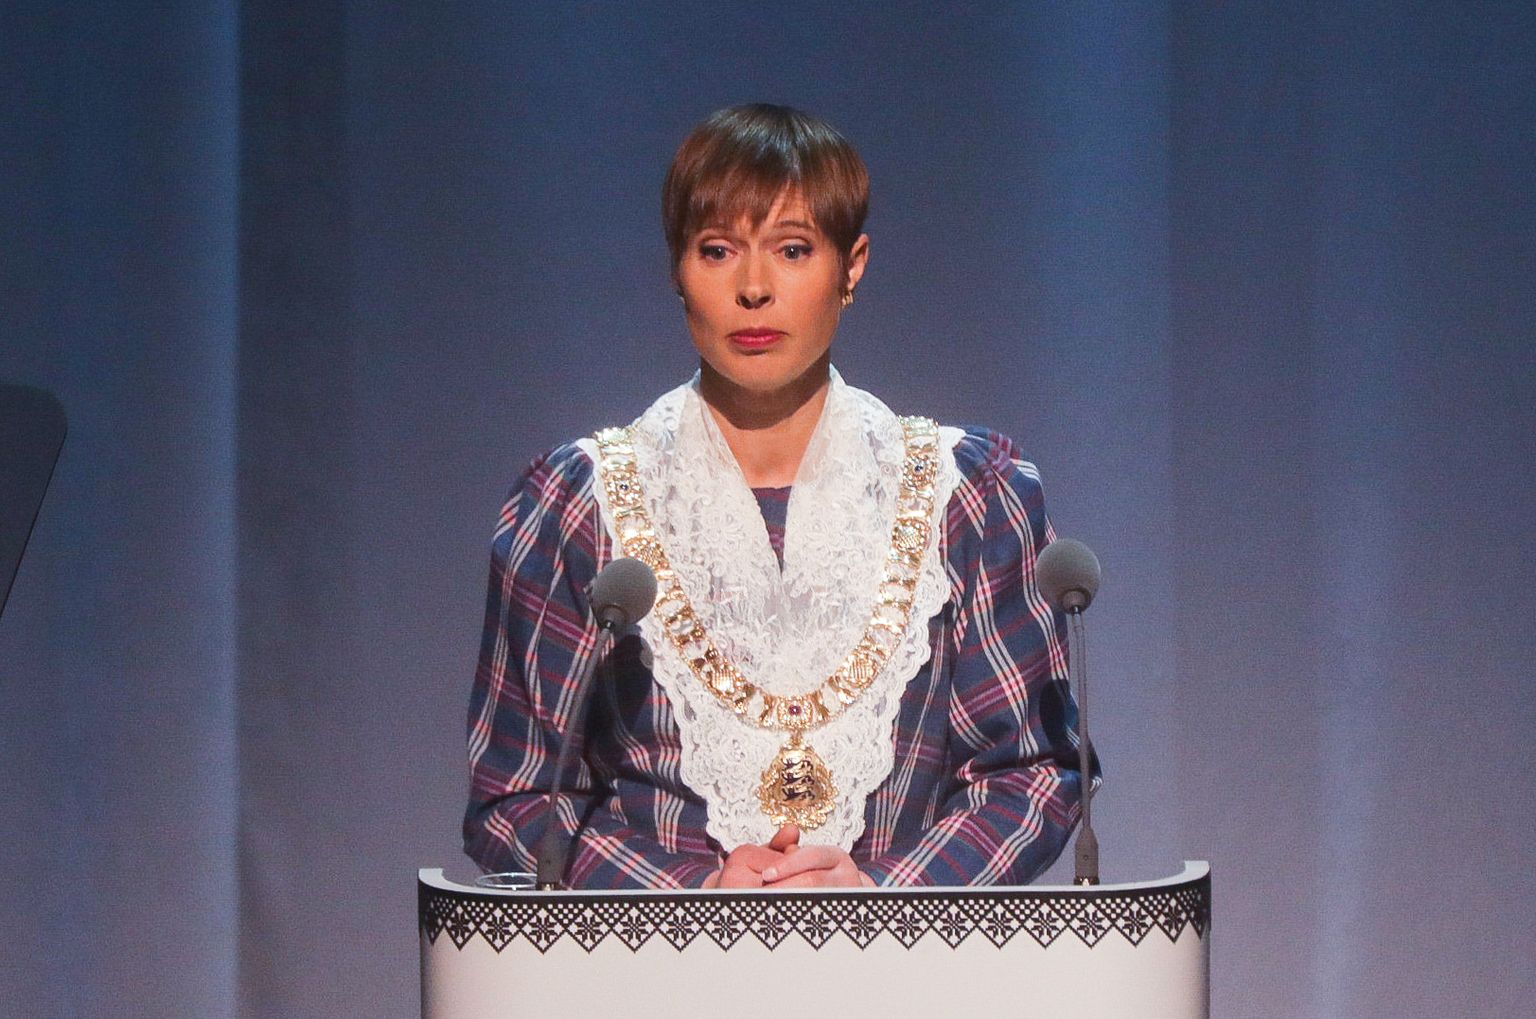 Independence Day speech by President of Estonia, Kersti Kaljulaid.